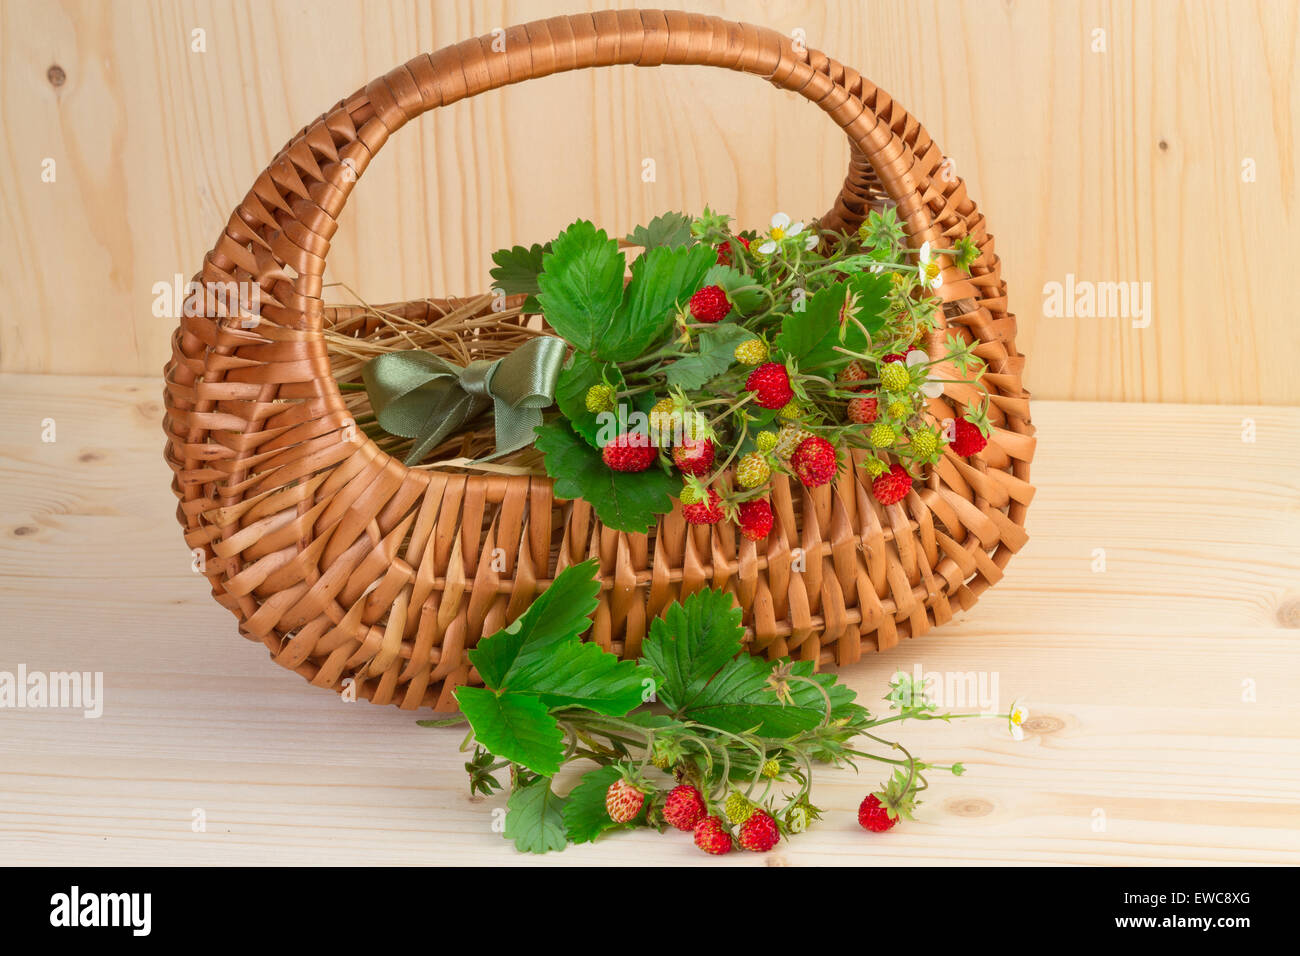 basket with wild strawberries Stock Photo